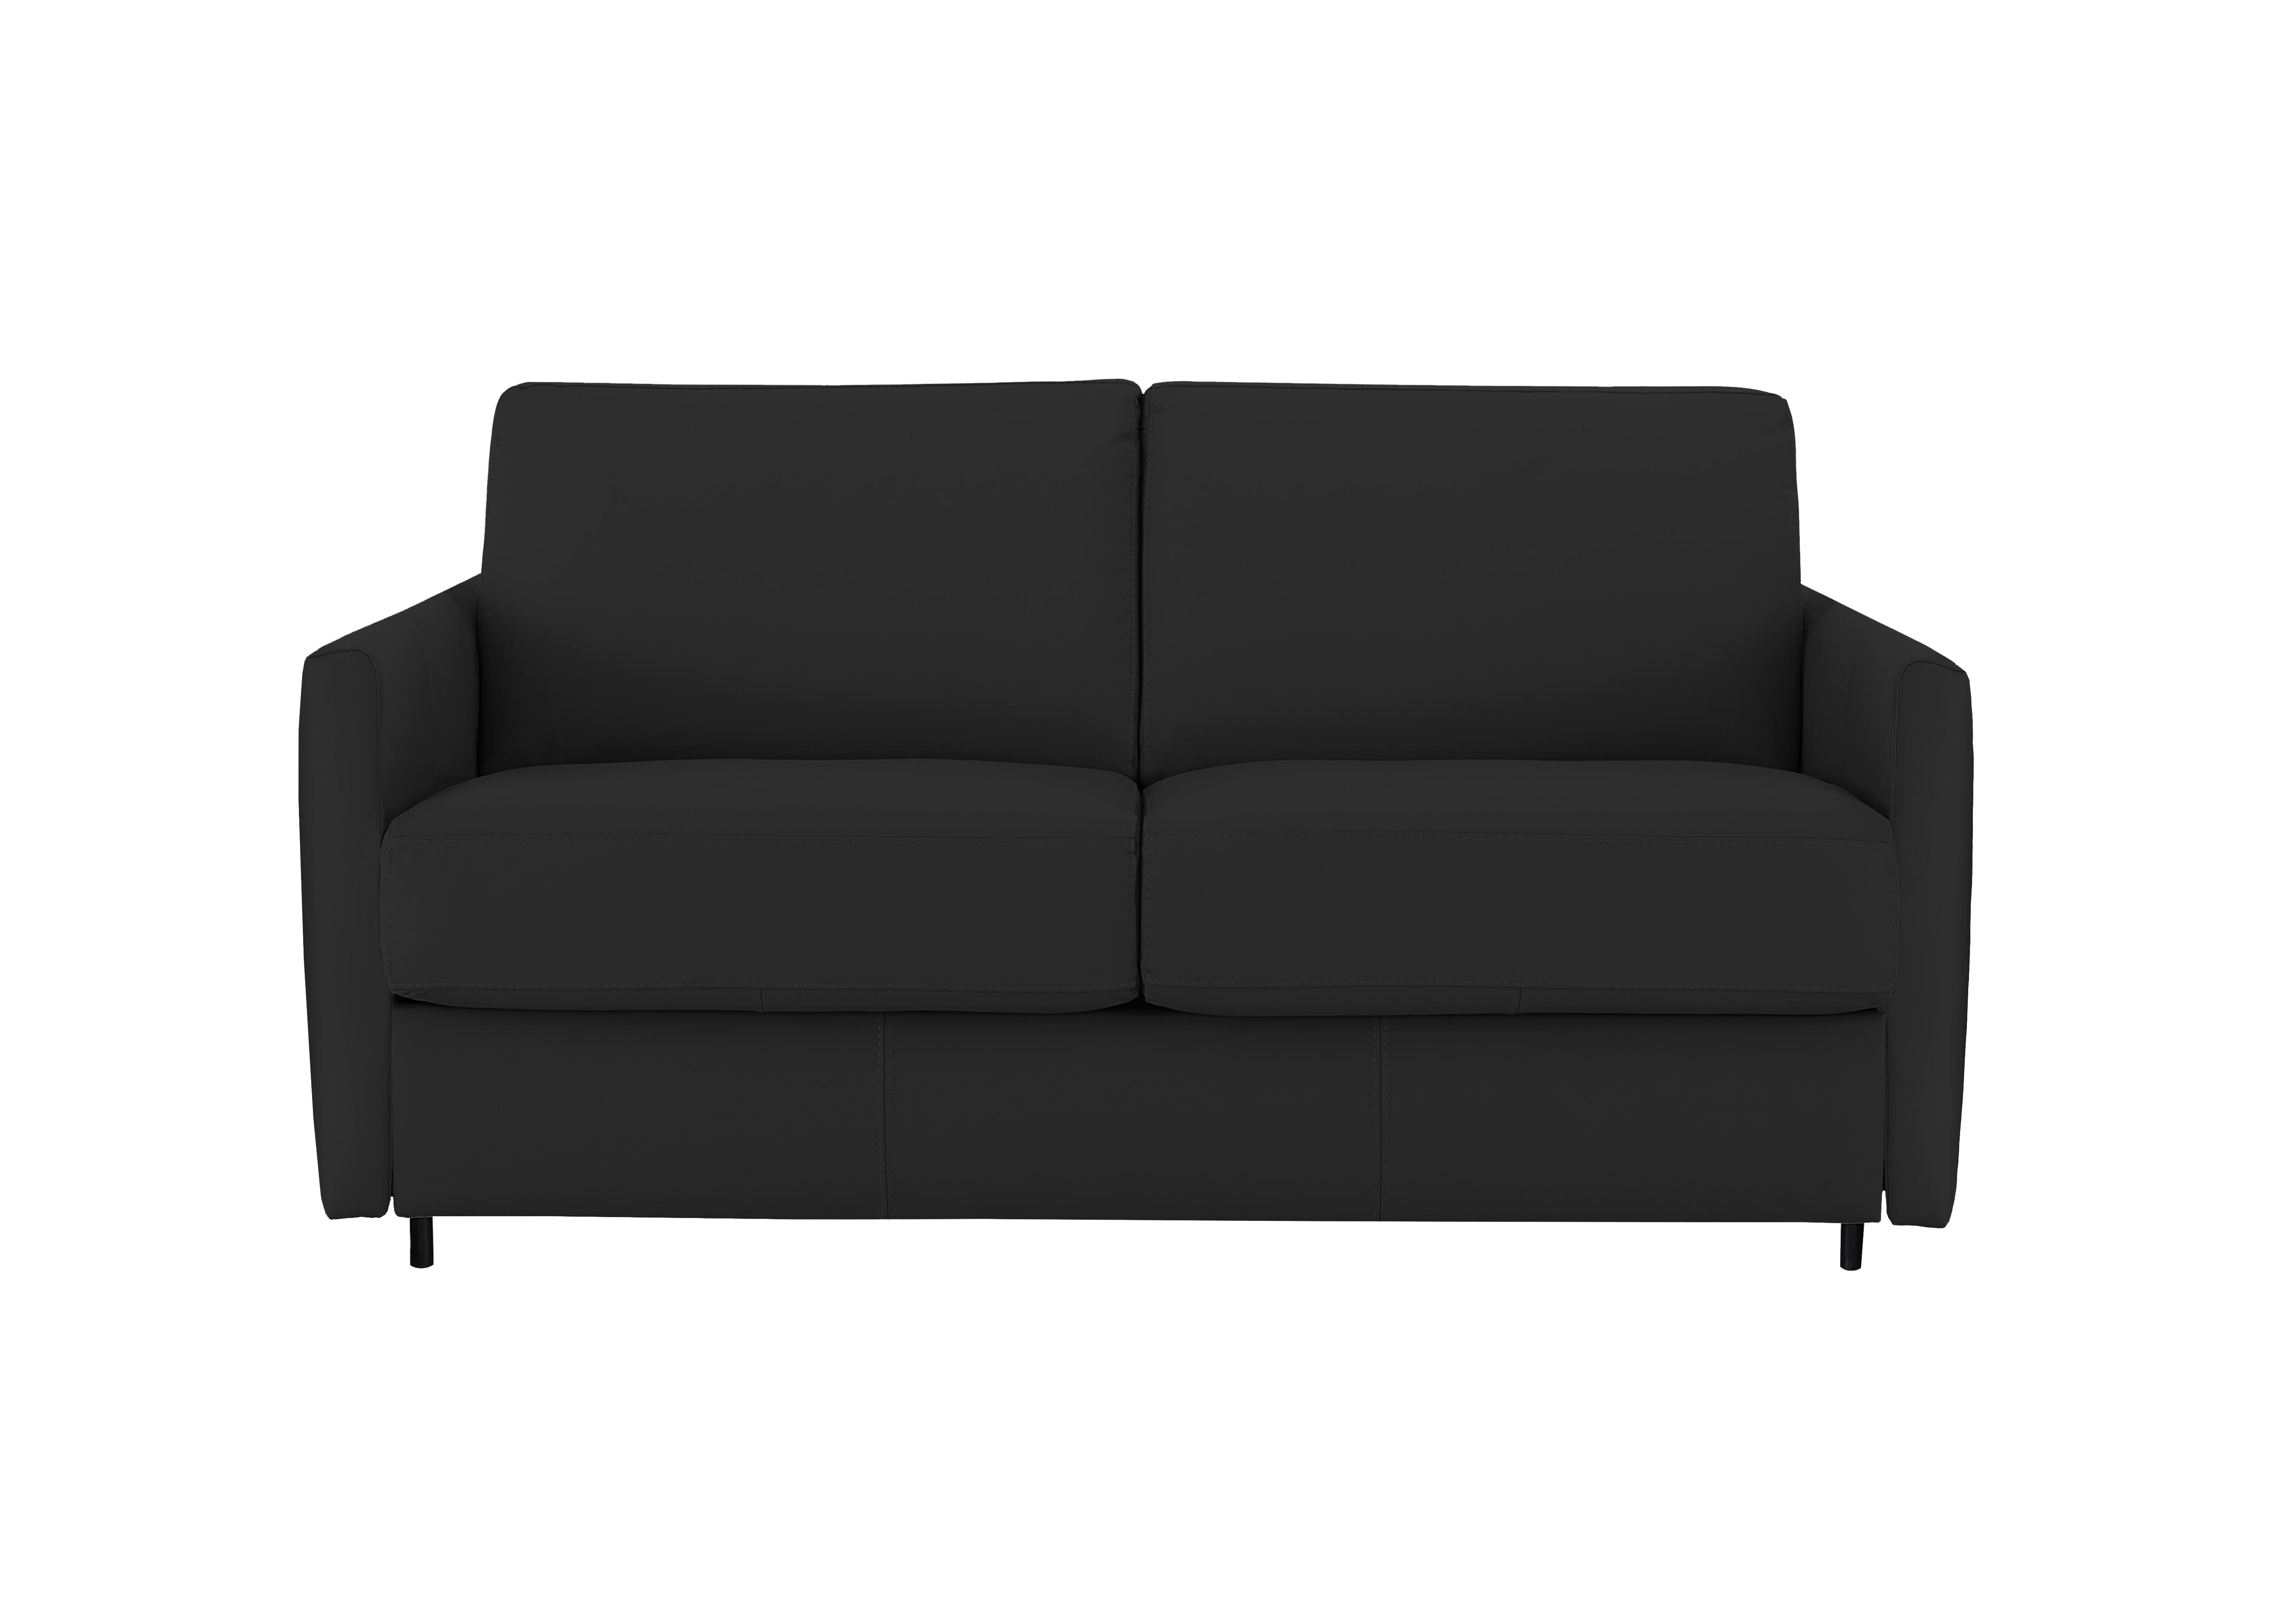 Alcova 2 Seater Leather Sofa Bed with Slim Arms in Torello Nero 71 on Furniture Village